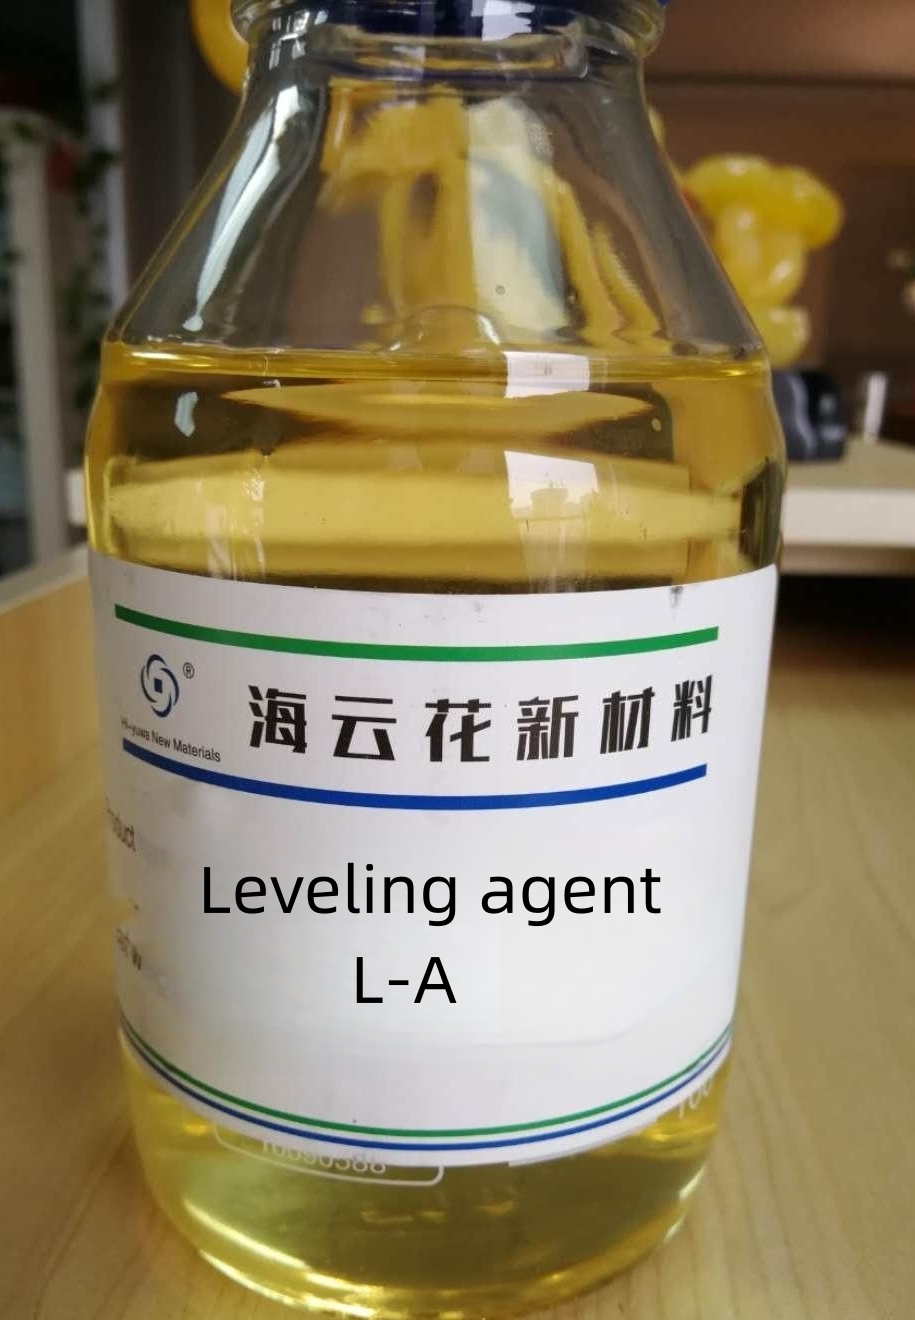 Leveling agent L-A